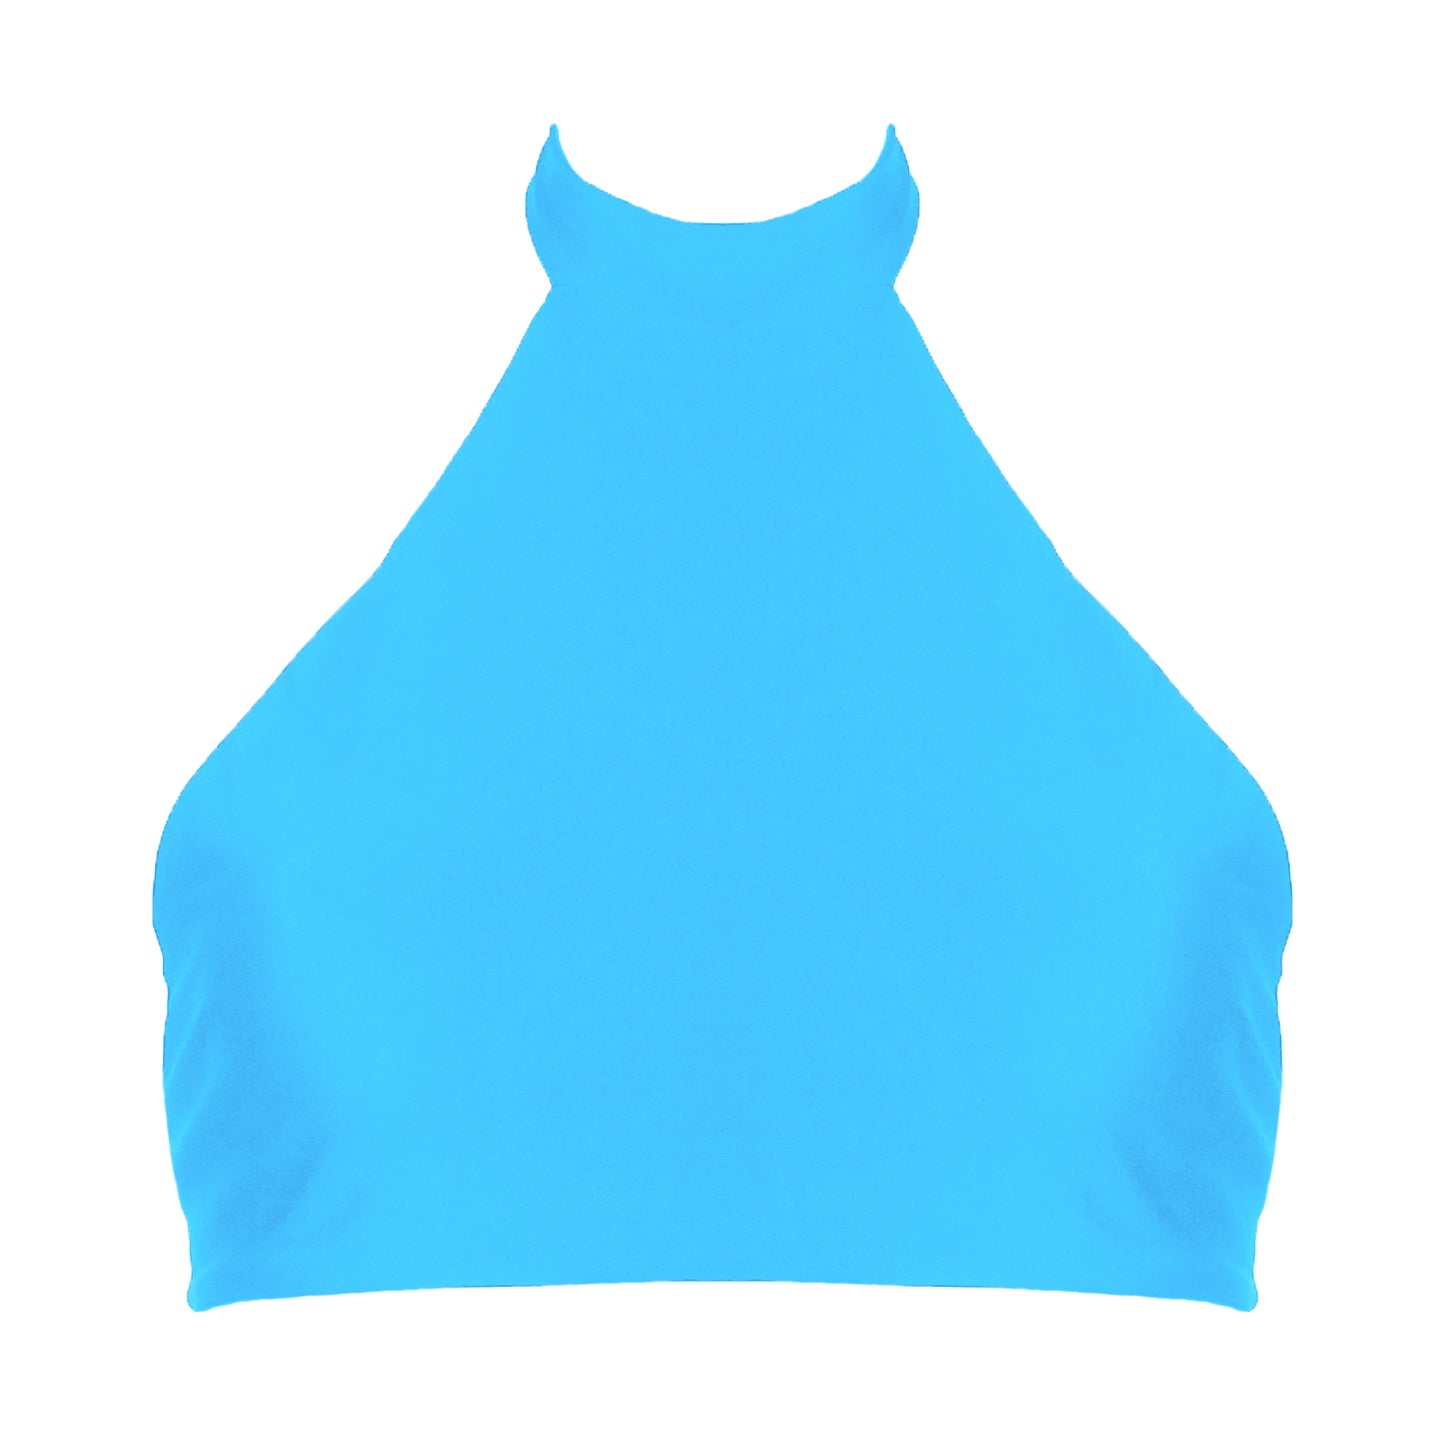 Acqua blue sport inspired halter neck bikini top with adjustable tie back straps.